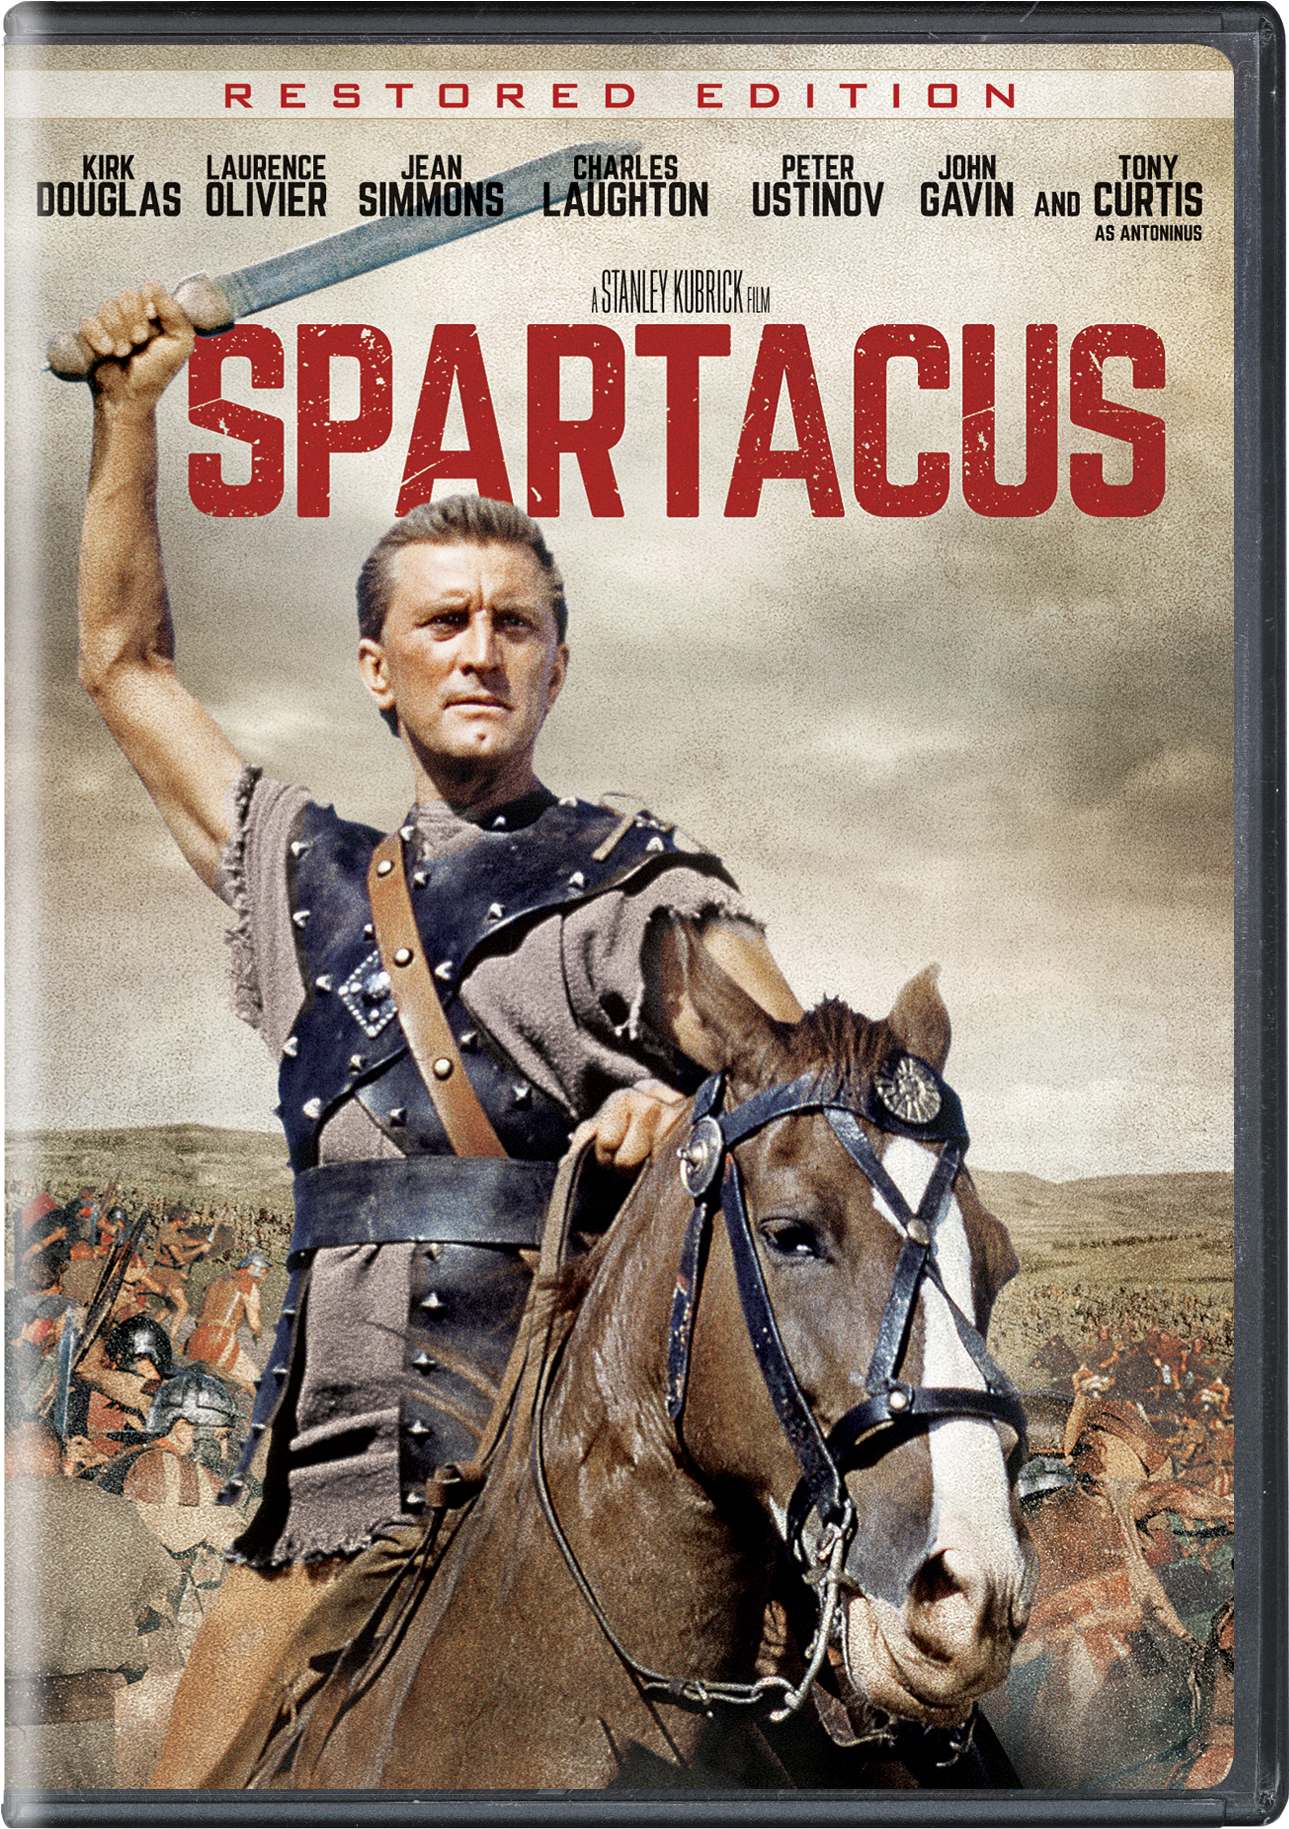 Spartacus (DVD Restored) - DVD [ 1960 ]  - Modern Classic Movies On DVD - Movies On GRUV